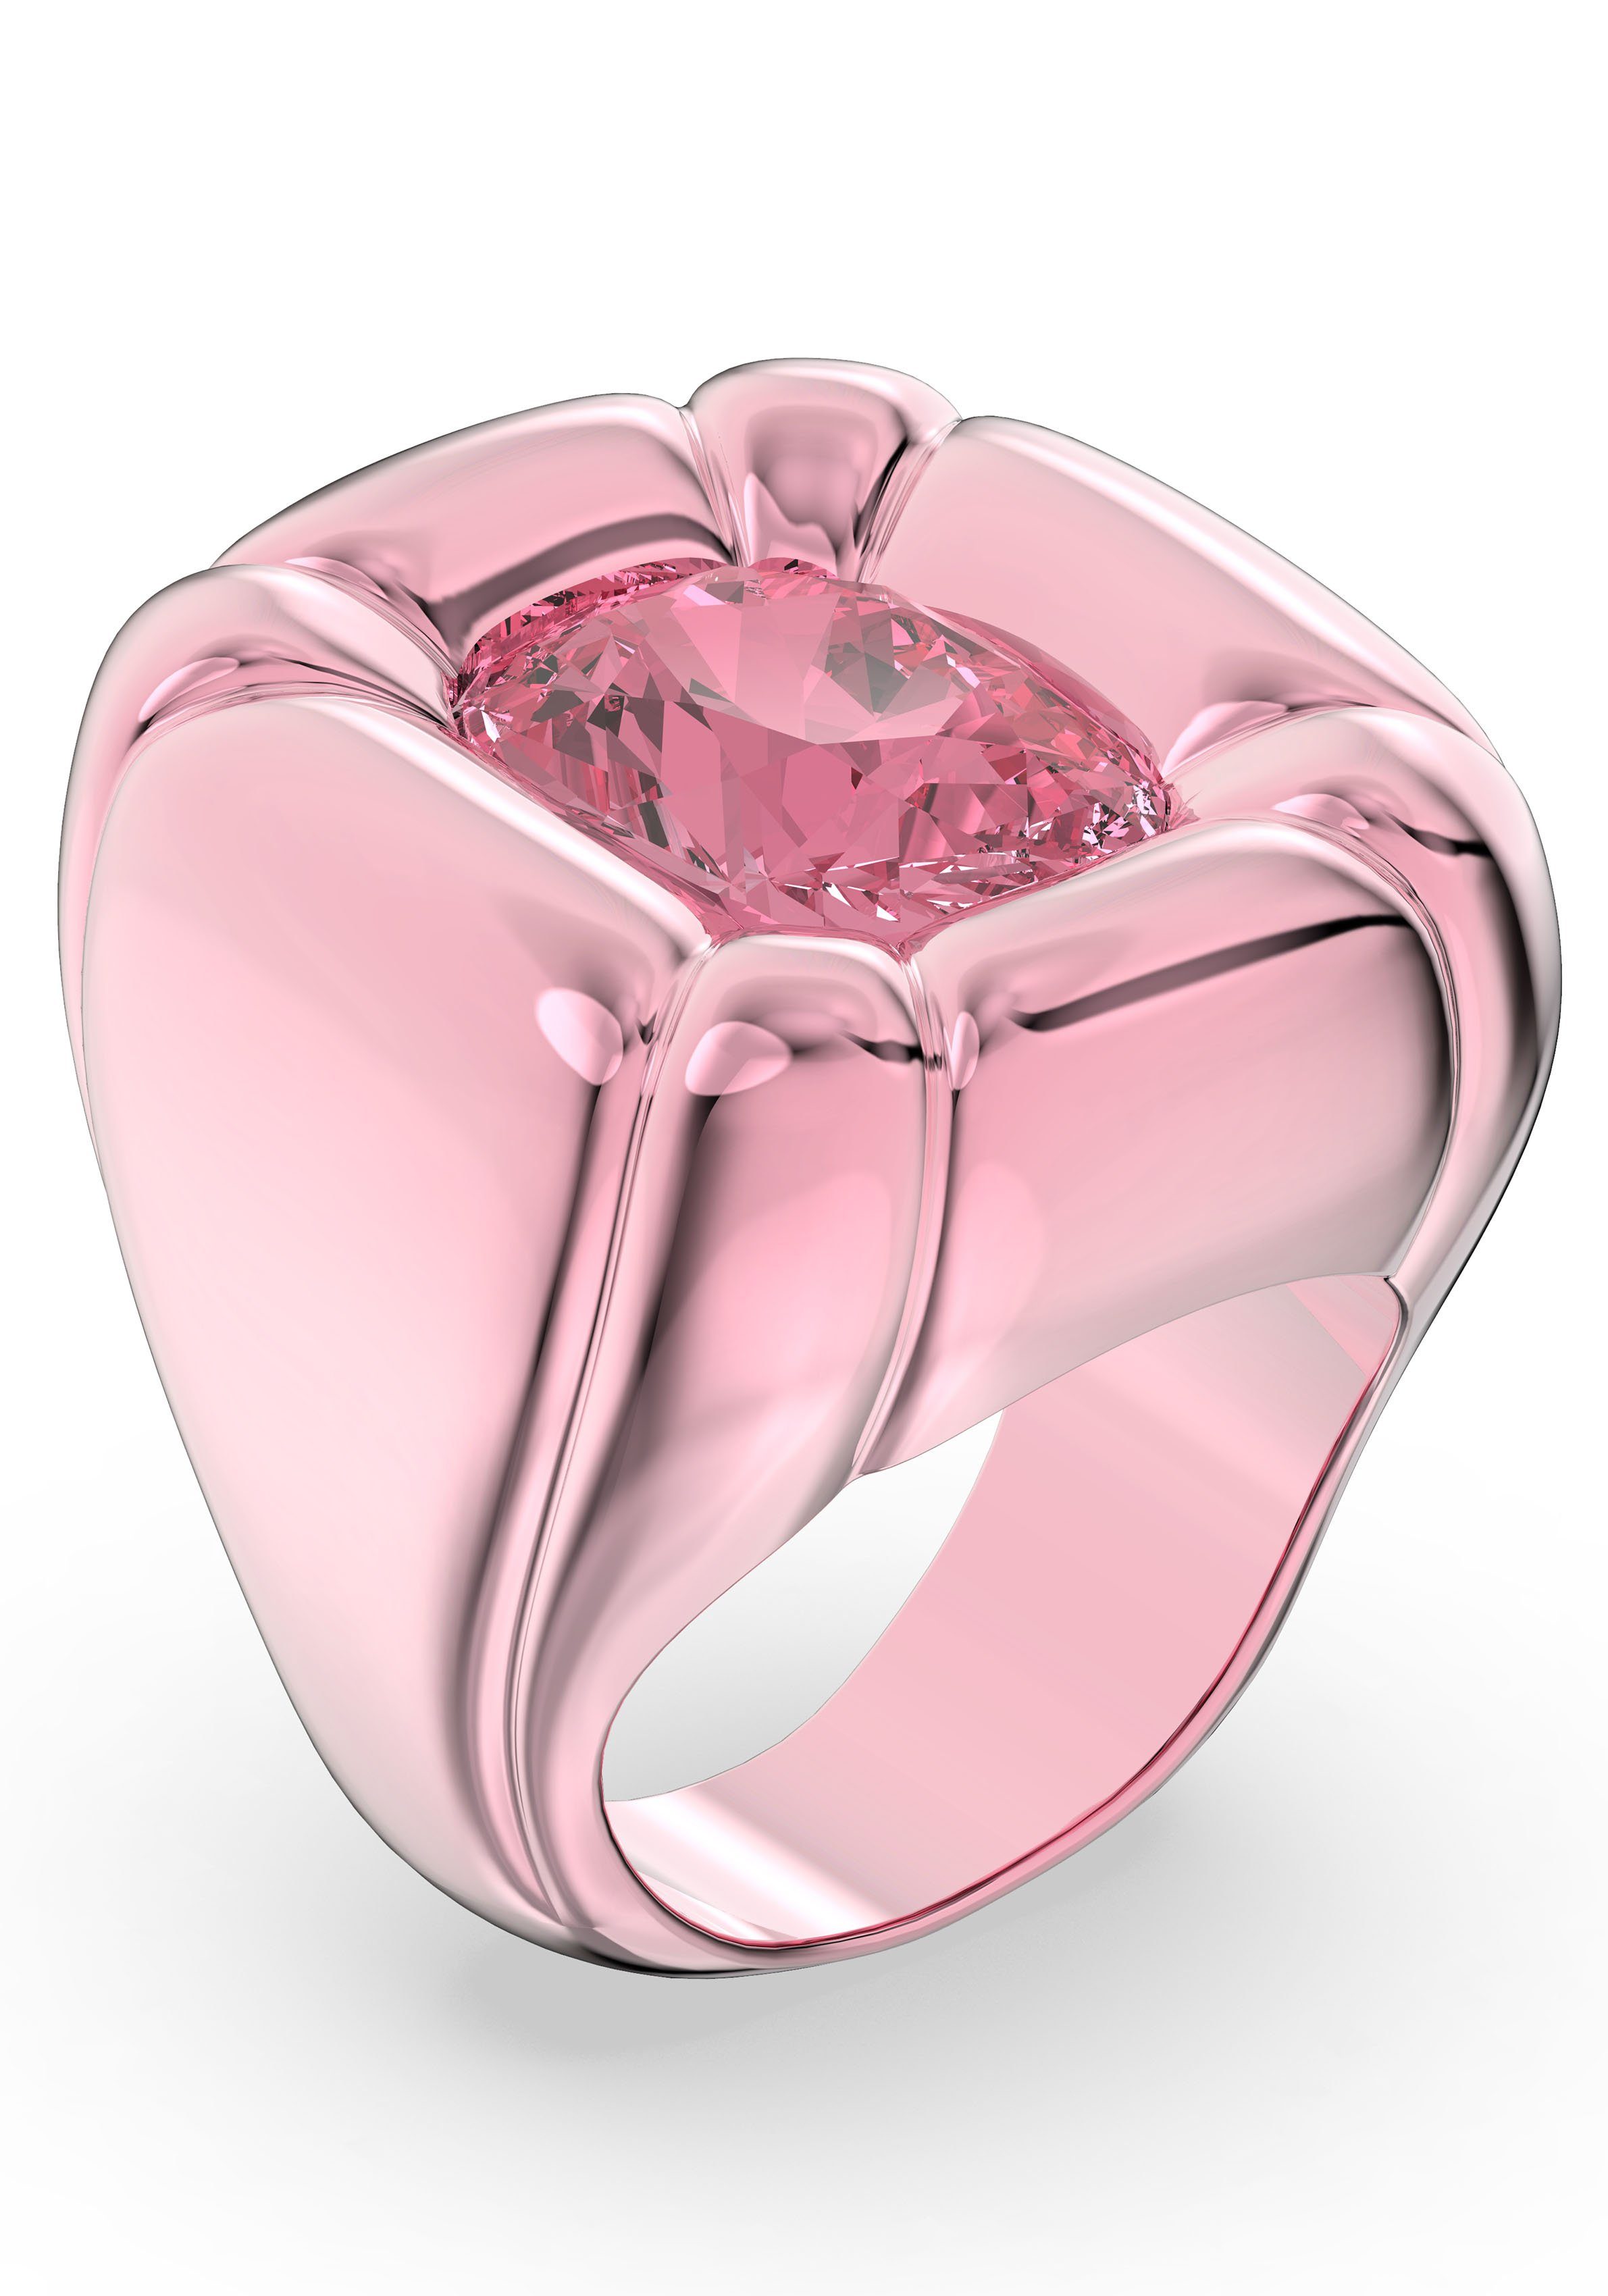 Swarovski Fingerring Dulcis Cocktail Ring, 5610803,5609721, 5610804,5609725, mit Swarovski® Kristall rosa-pink